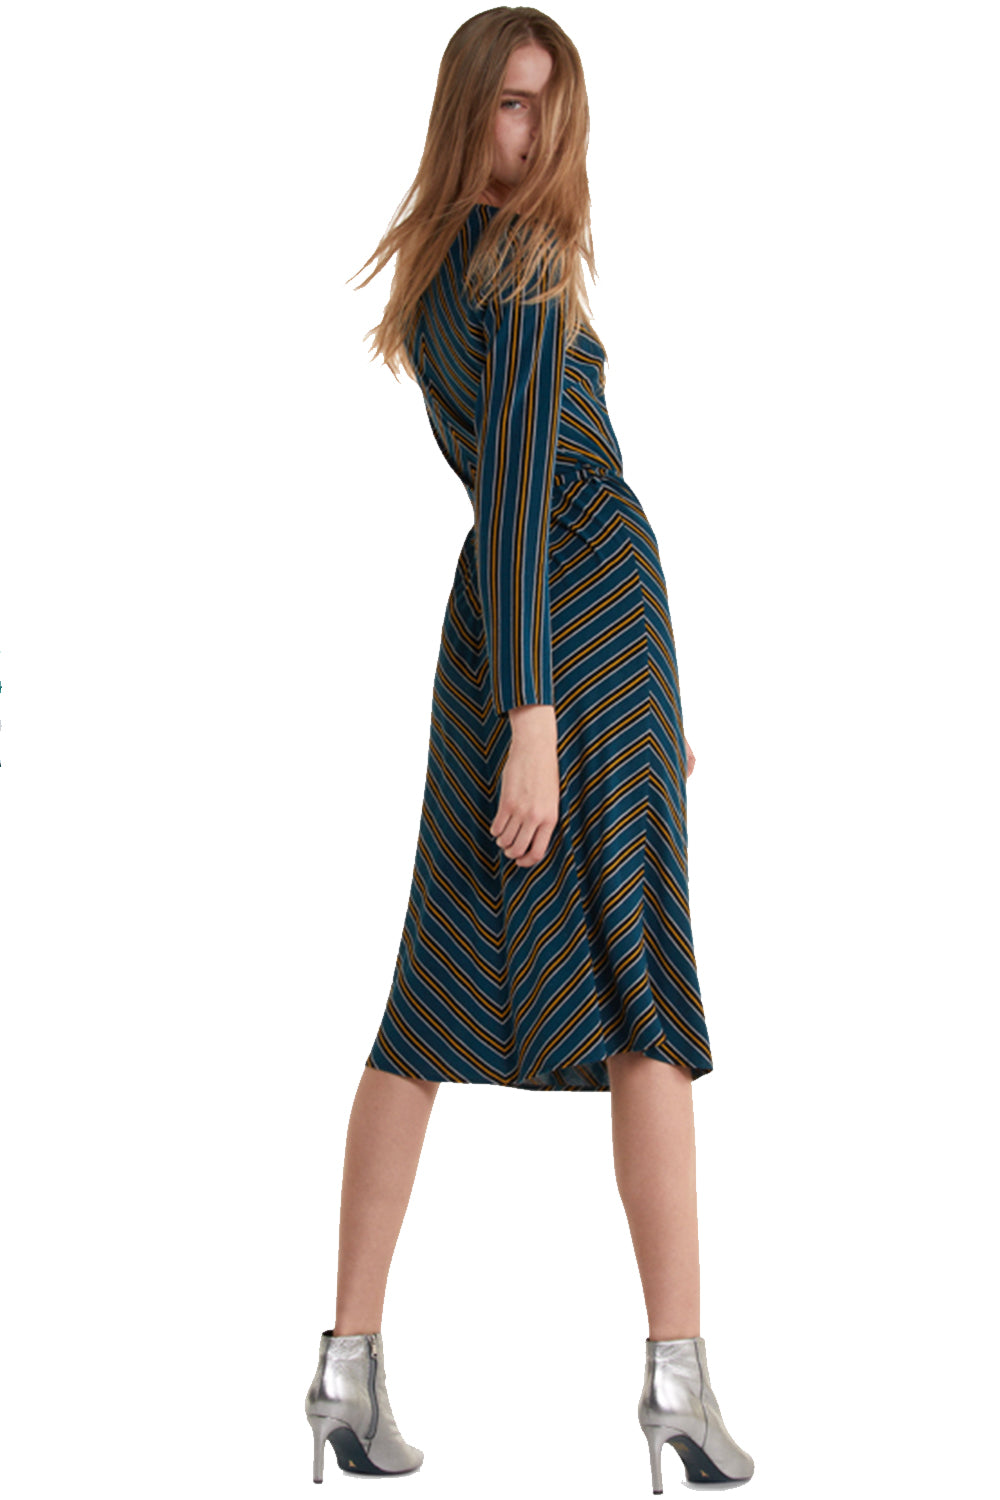 Patrizia Pepe Dress Dark Stripe Teal - Sub Couture